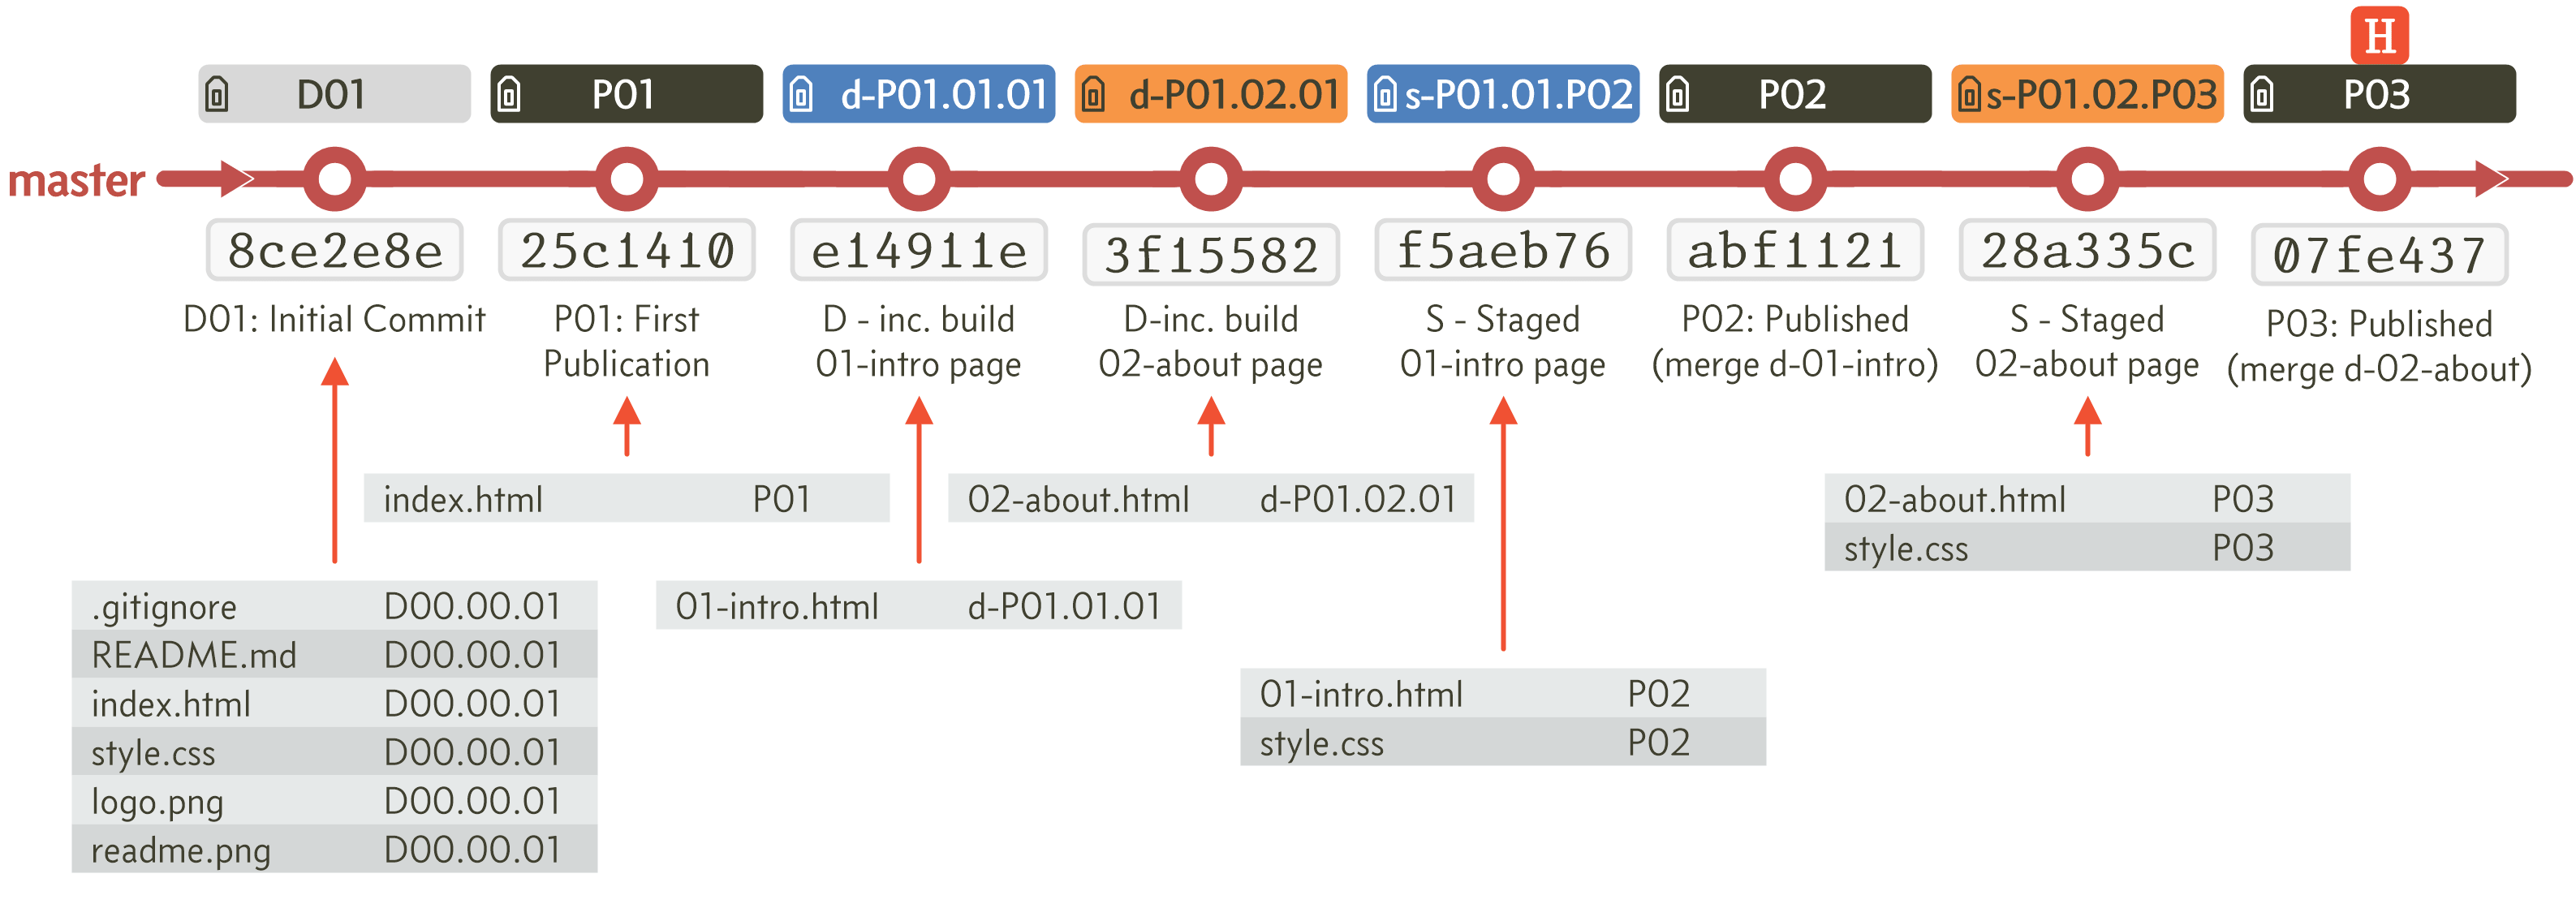 Figure 8.1 - Final arrangement, all merged back to master branch